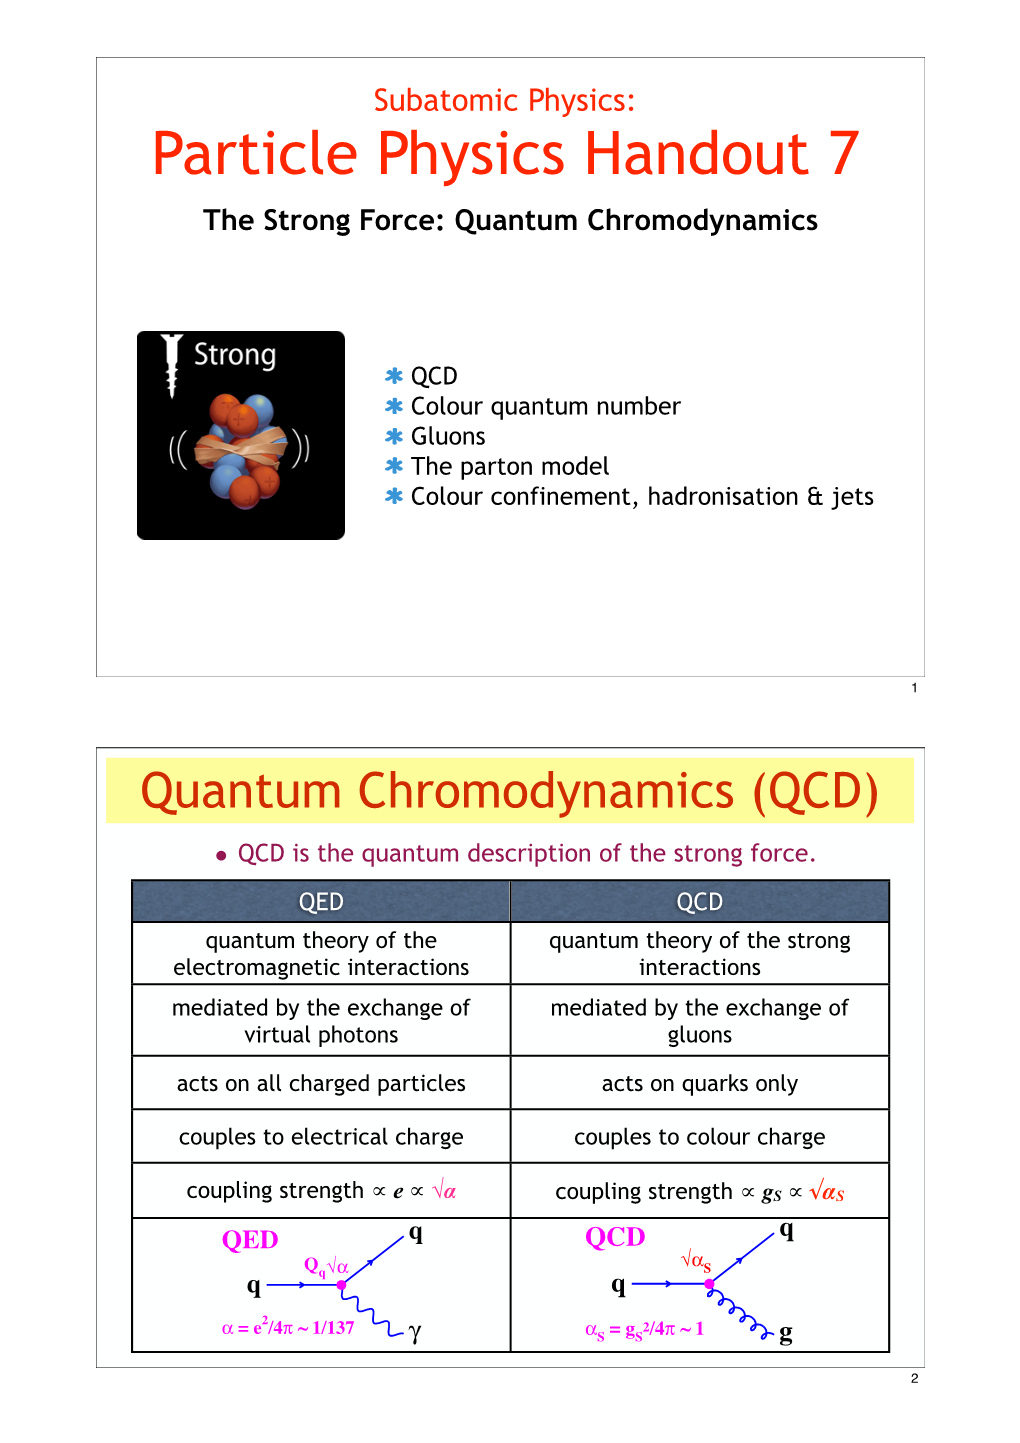 Particle Physics Handout 7 the Strong Force: Quantum Chromodynamics